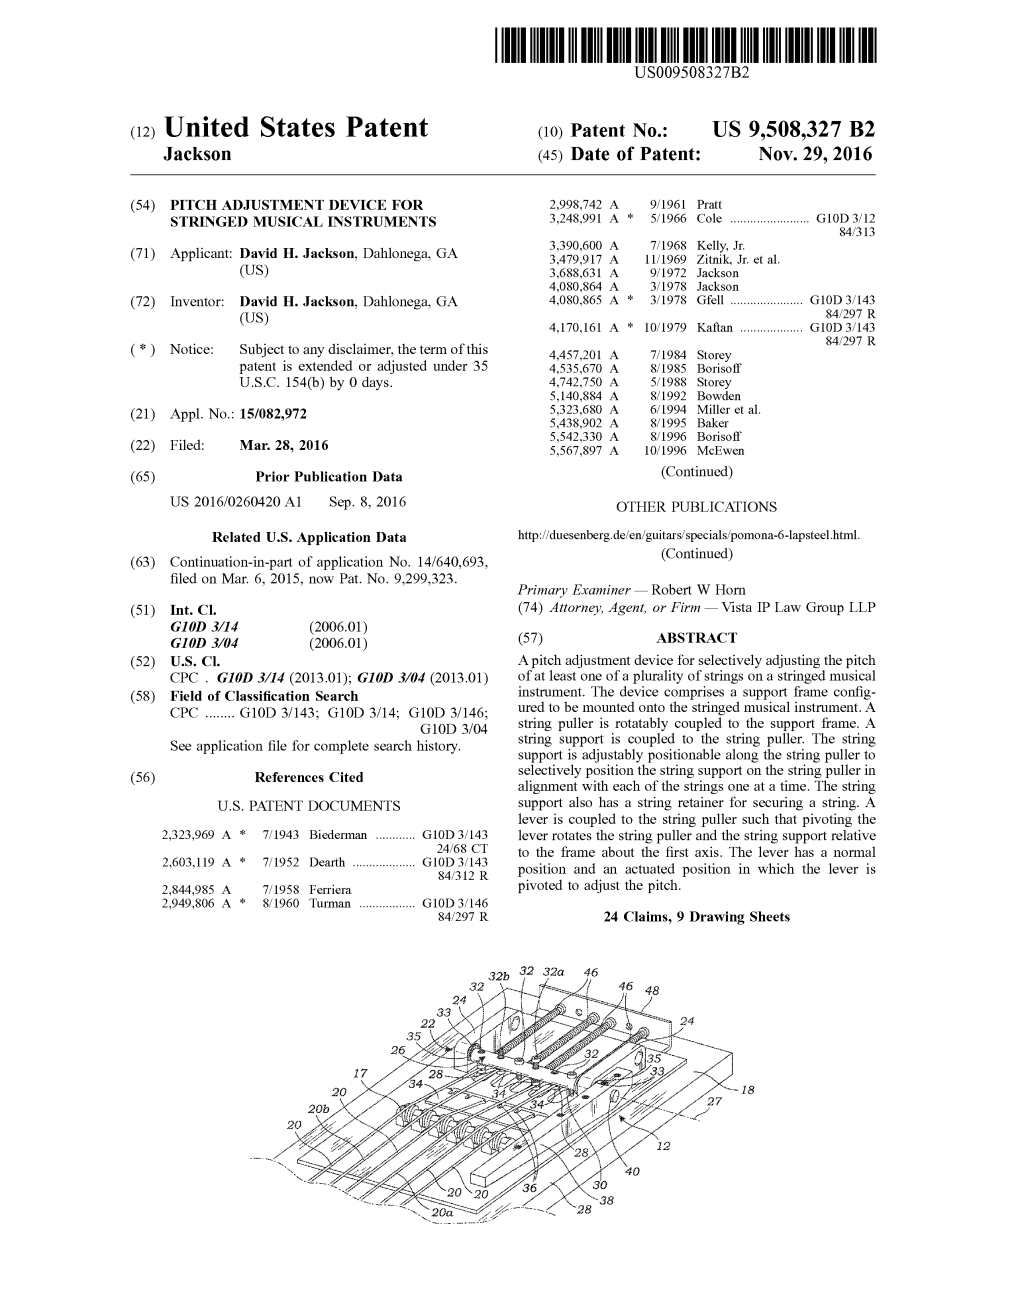 United States Patent (10) Patent No.: US 9,508,327 B2 Jackson (45) Date of Patent: Nov